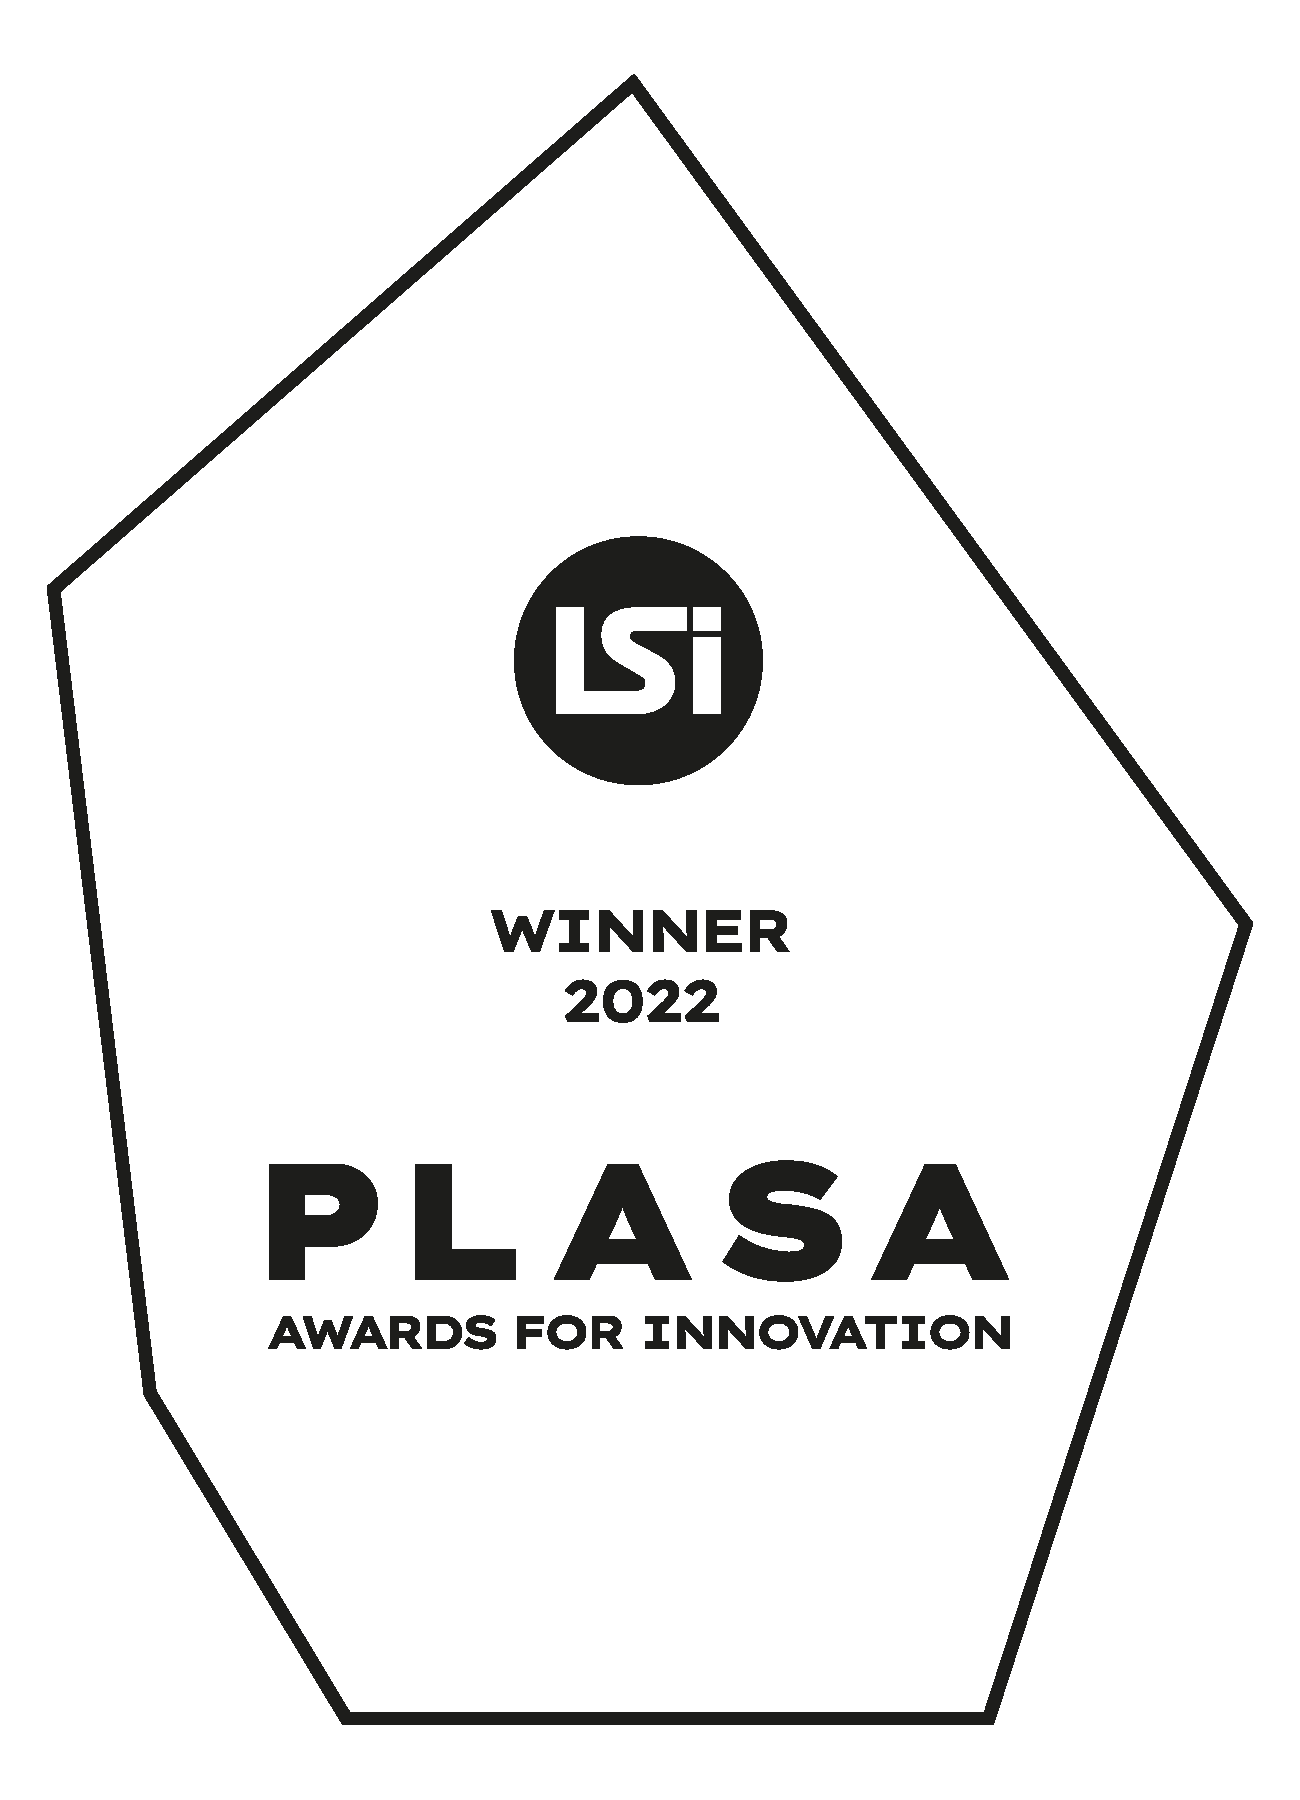 Award for Innovation 2022